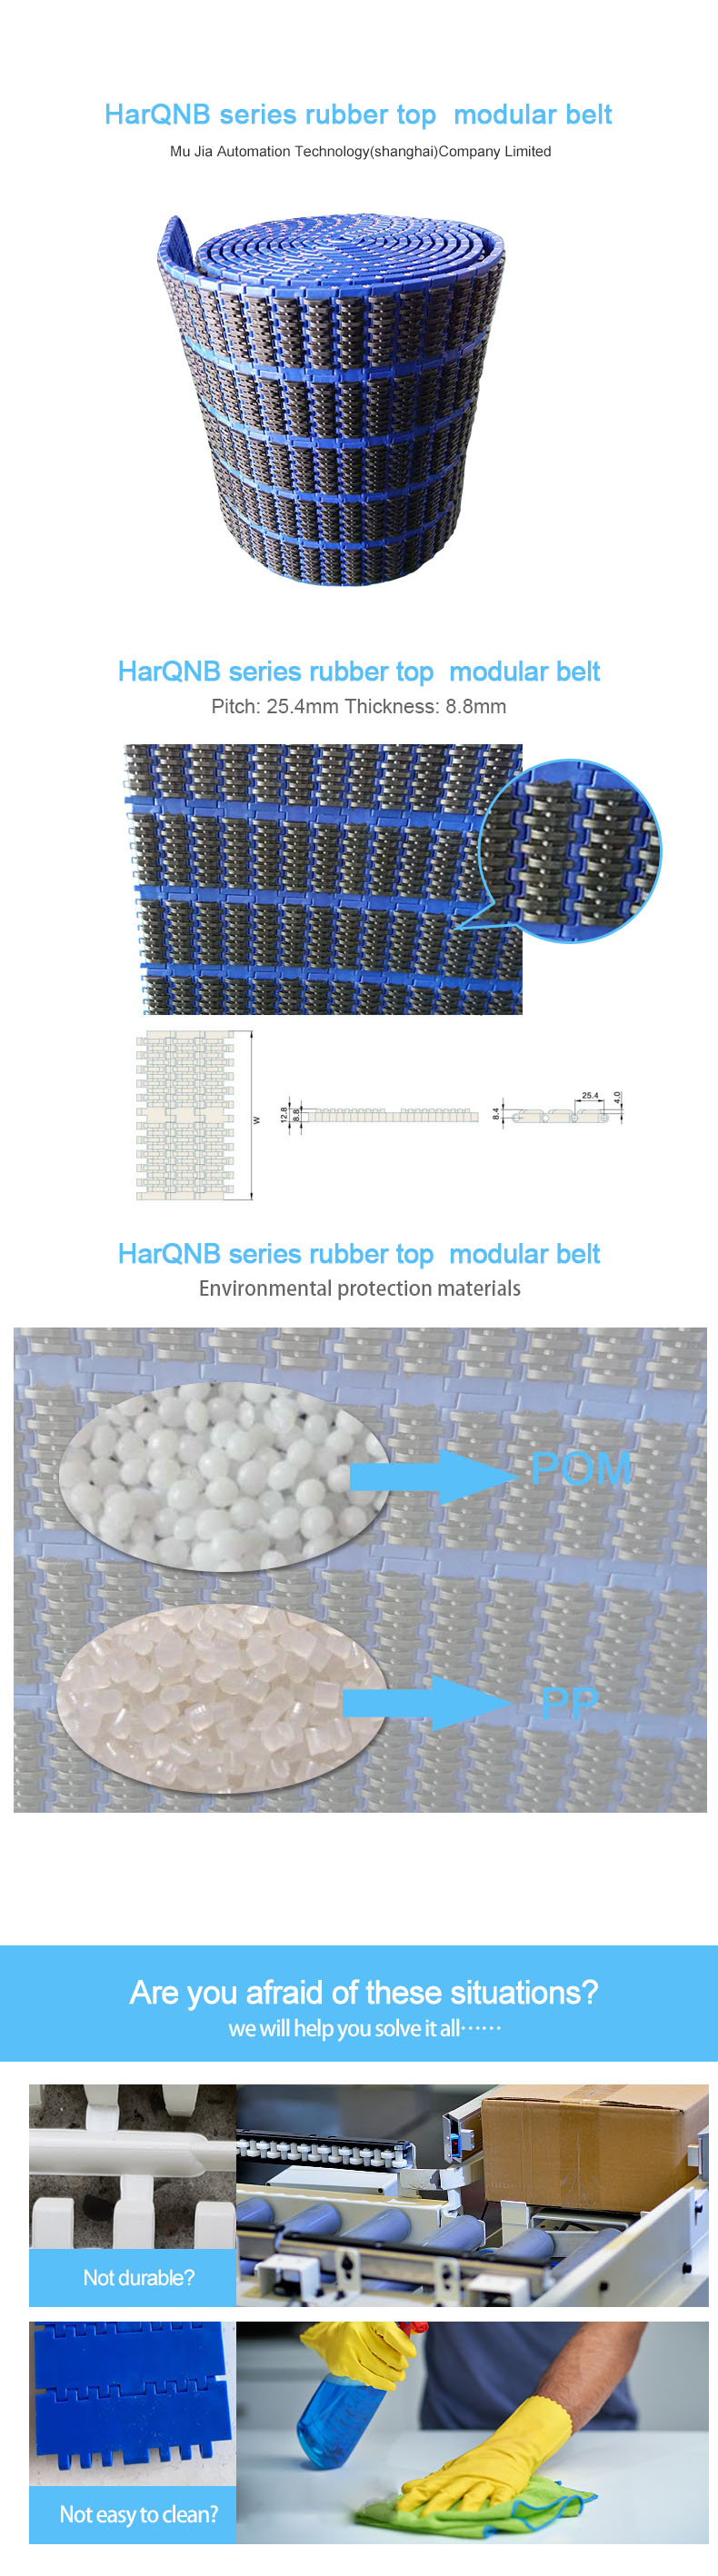 HarQNB rubber modular belt.jpg